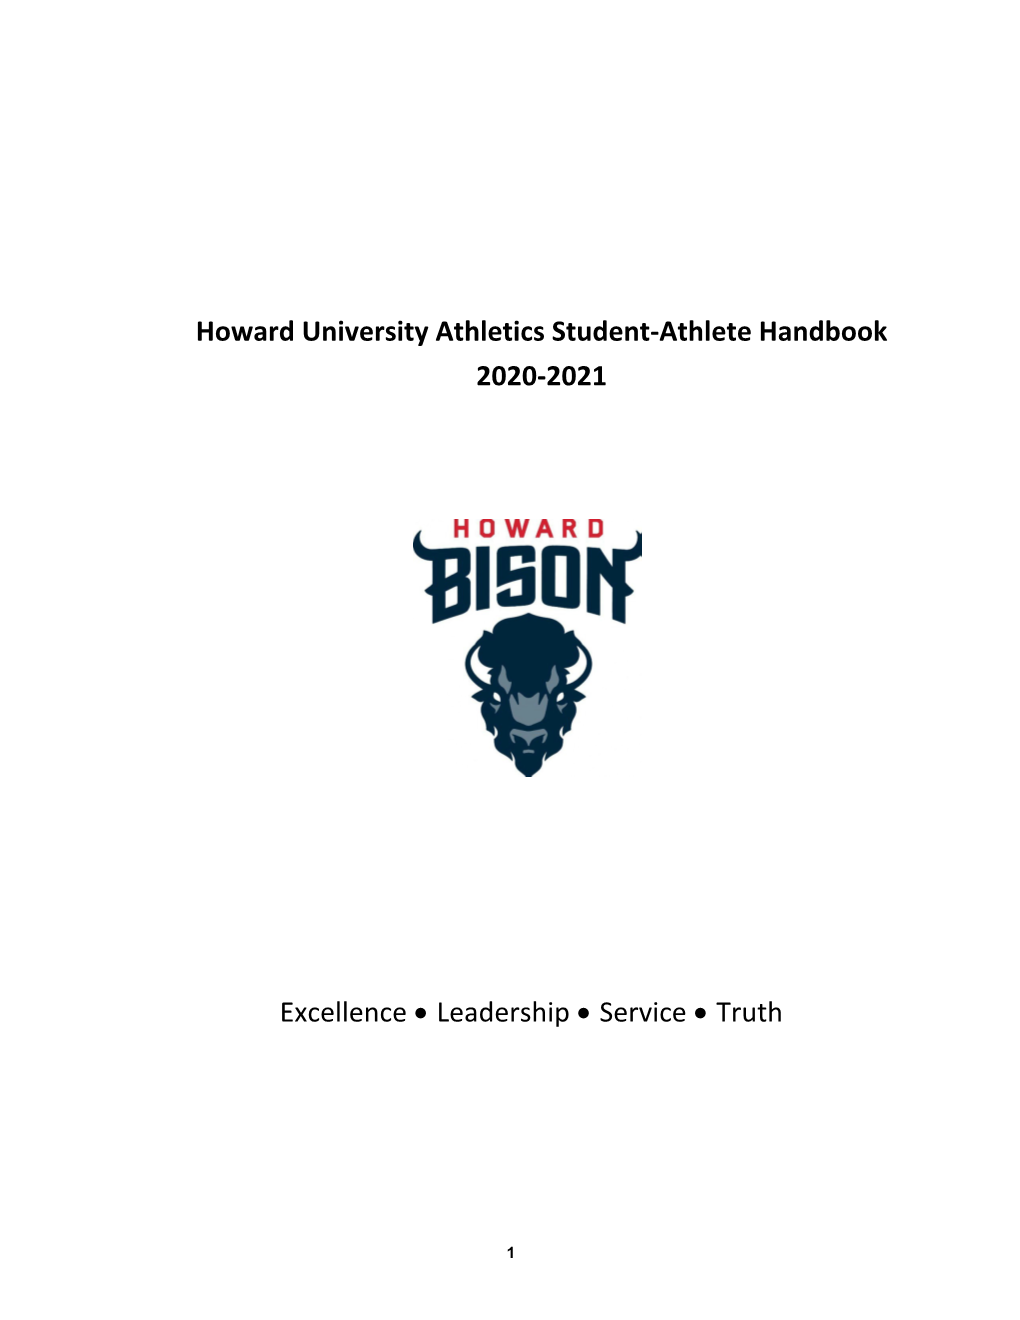 Howard University Athletics Student-Athlete Handbook 2020-2021